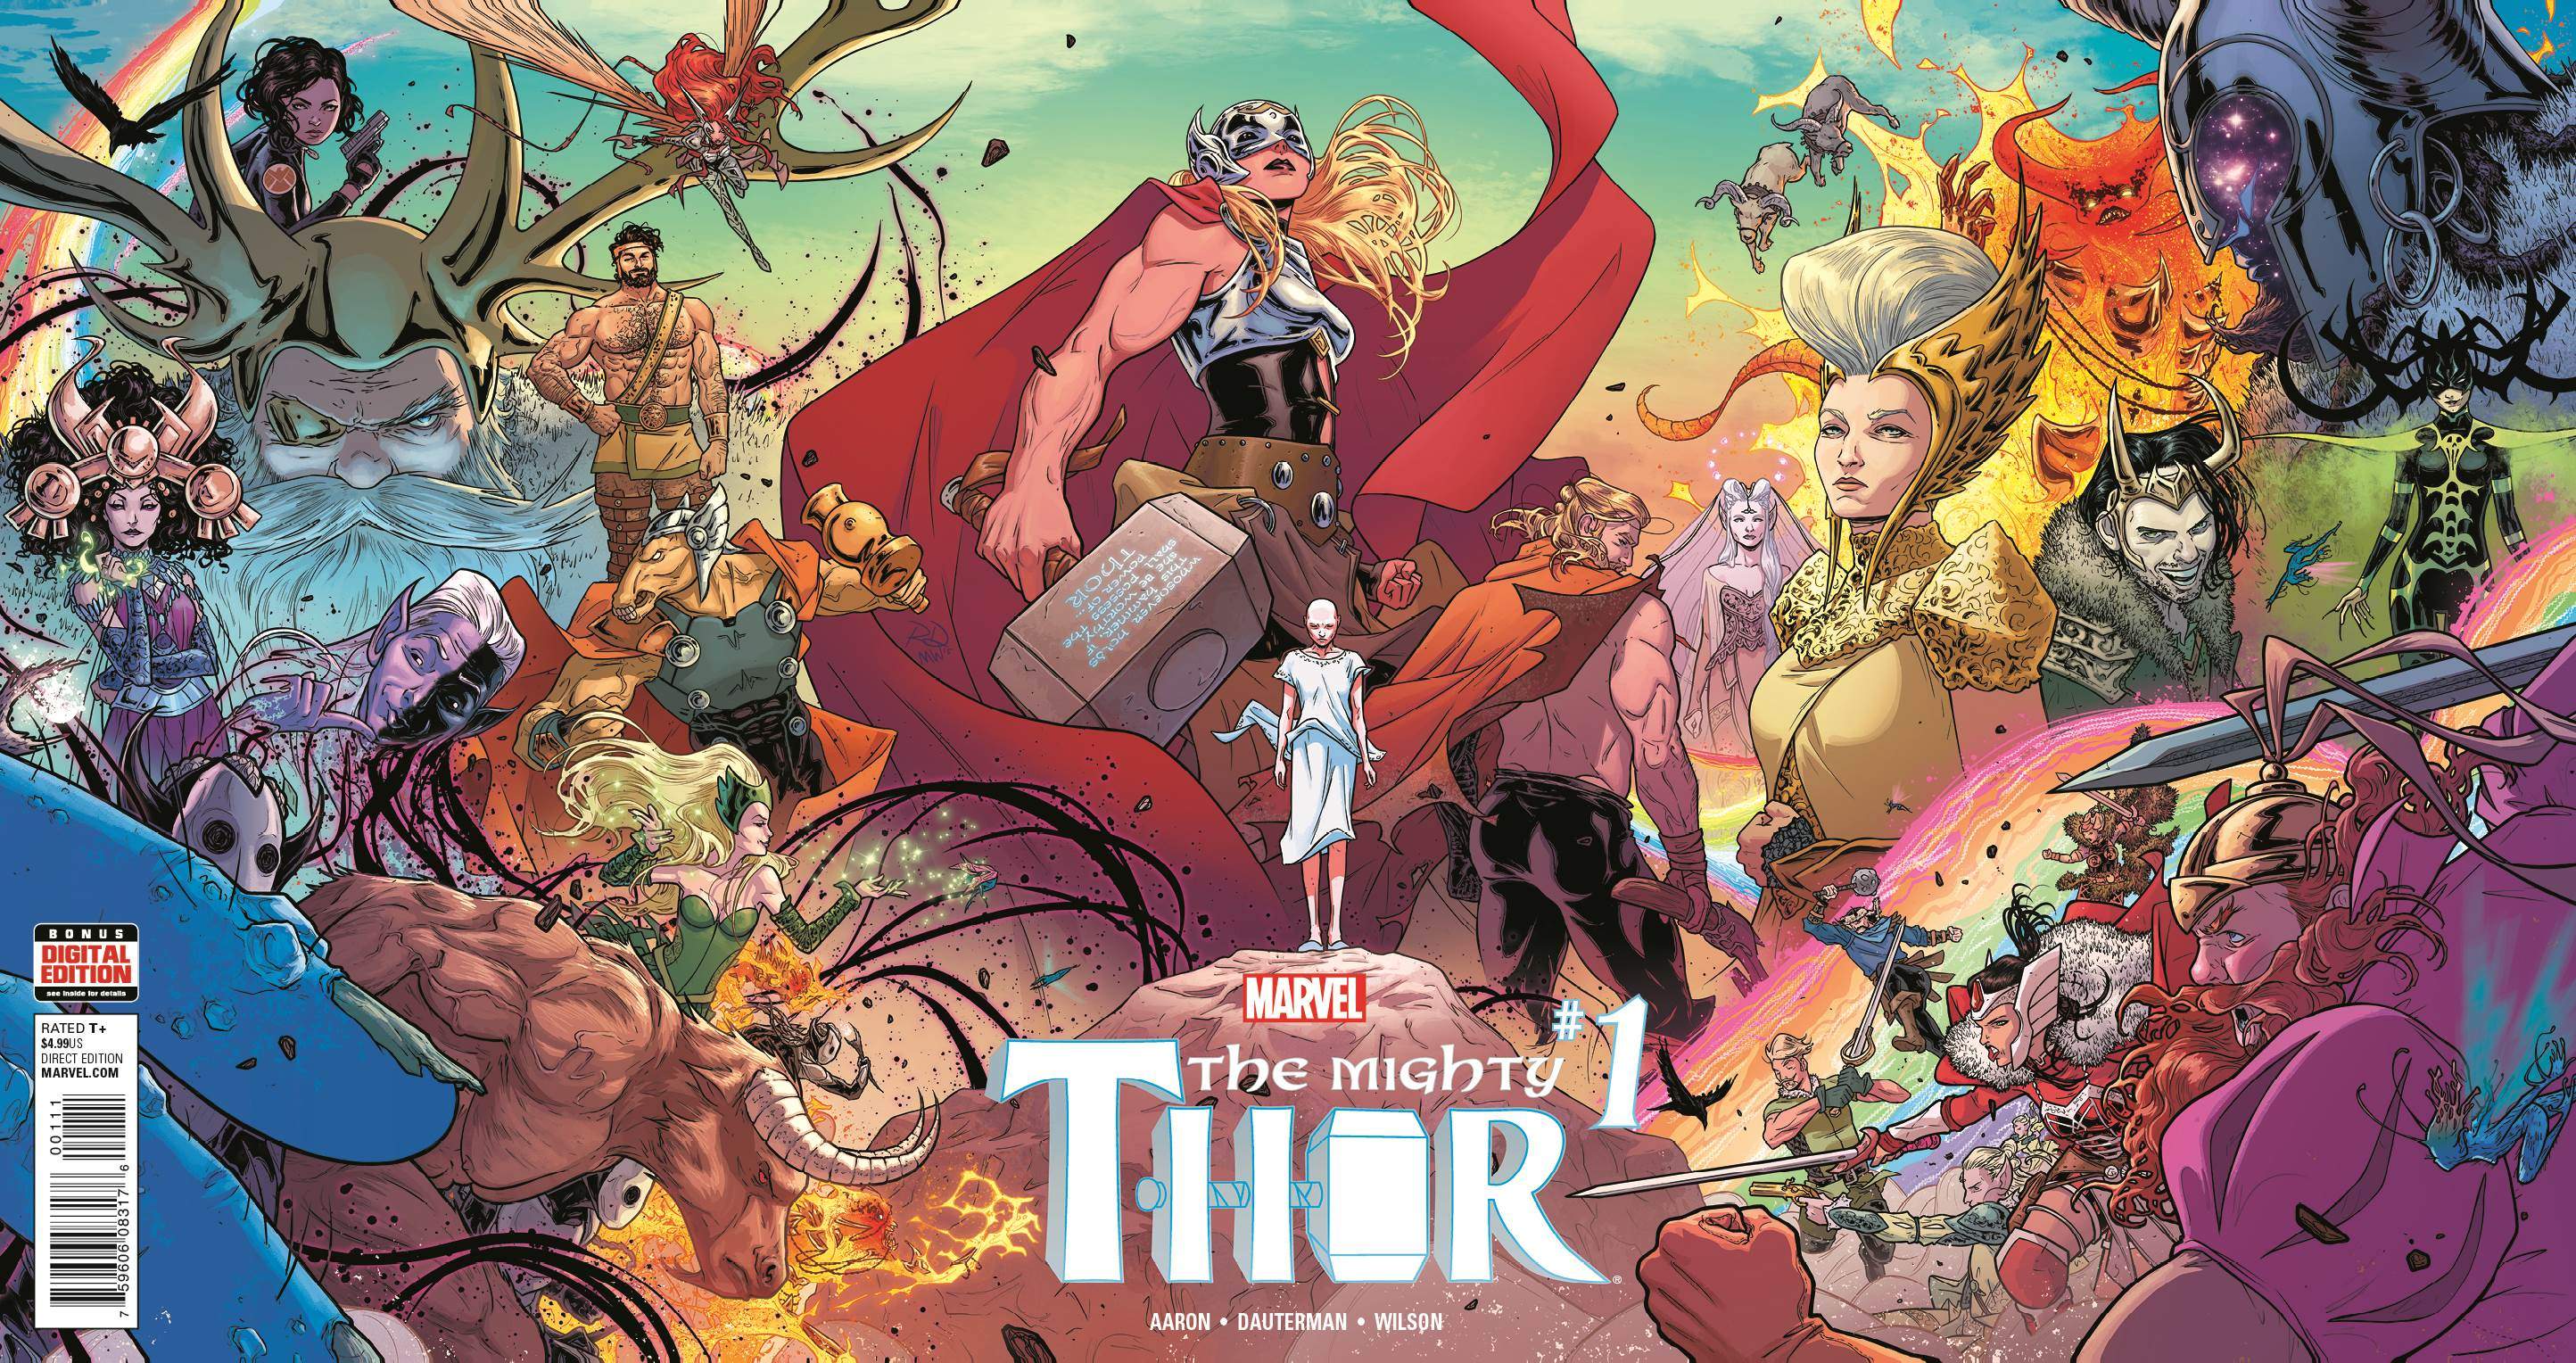 The Mighty Thor #1 Wraparound Gatefold Cover